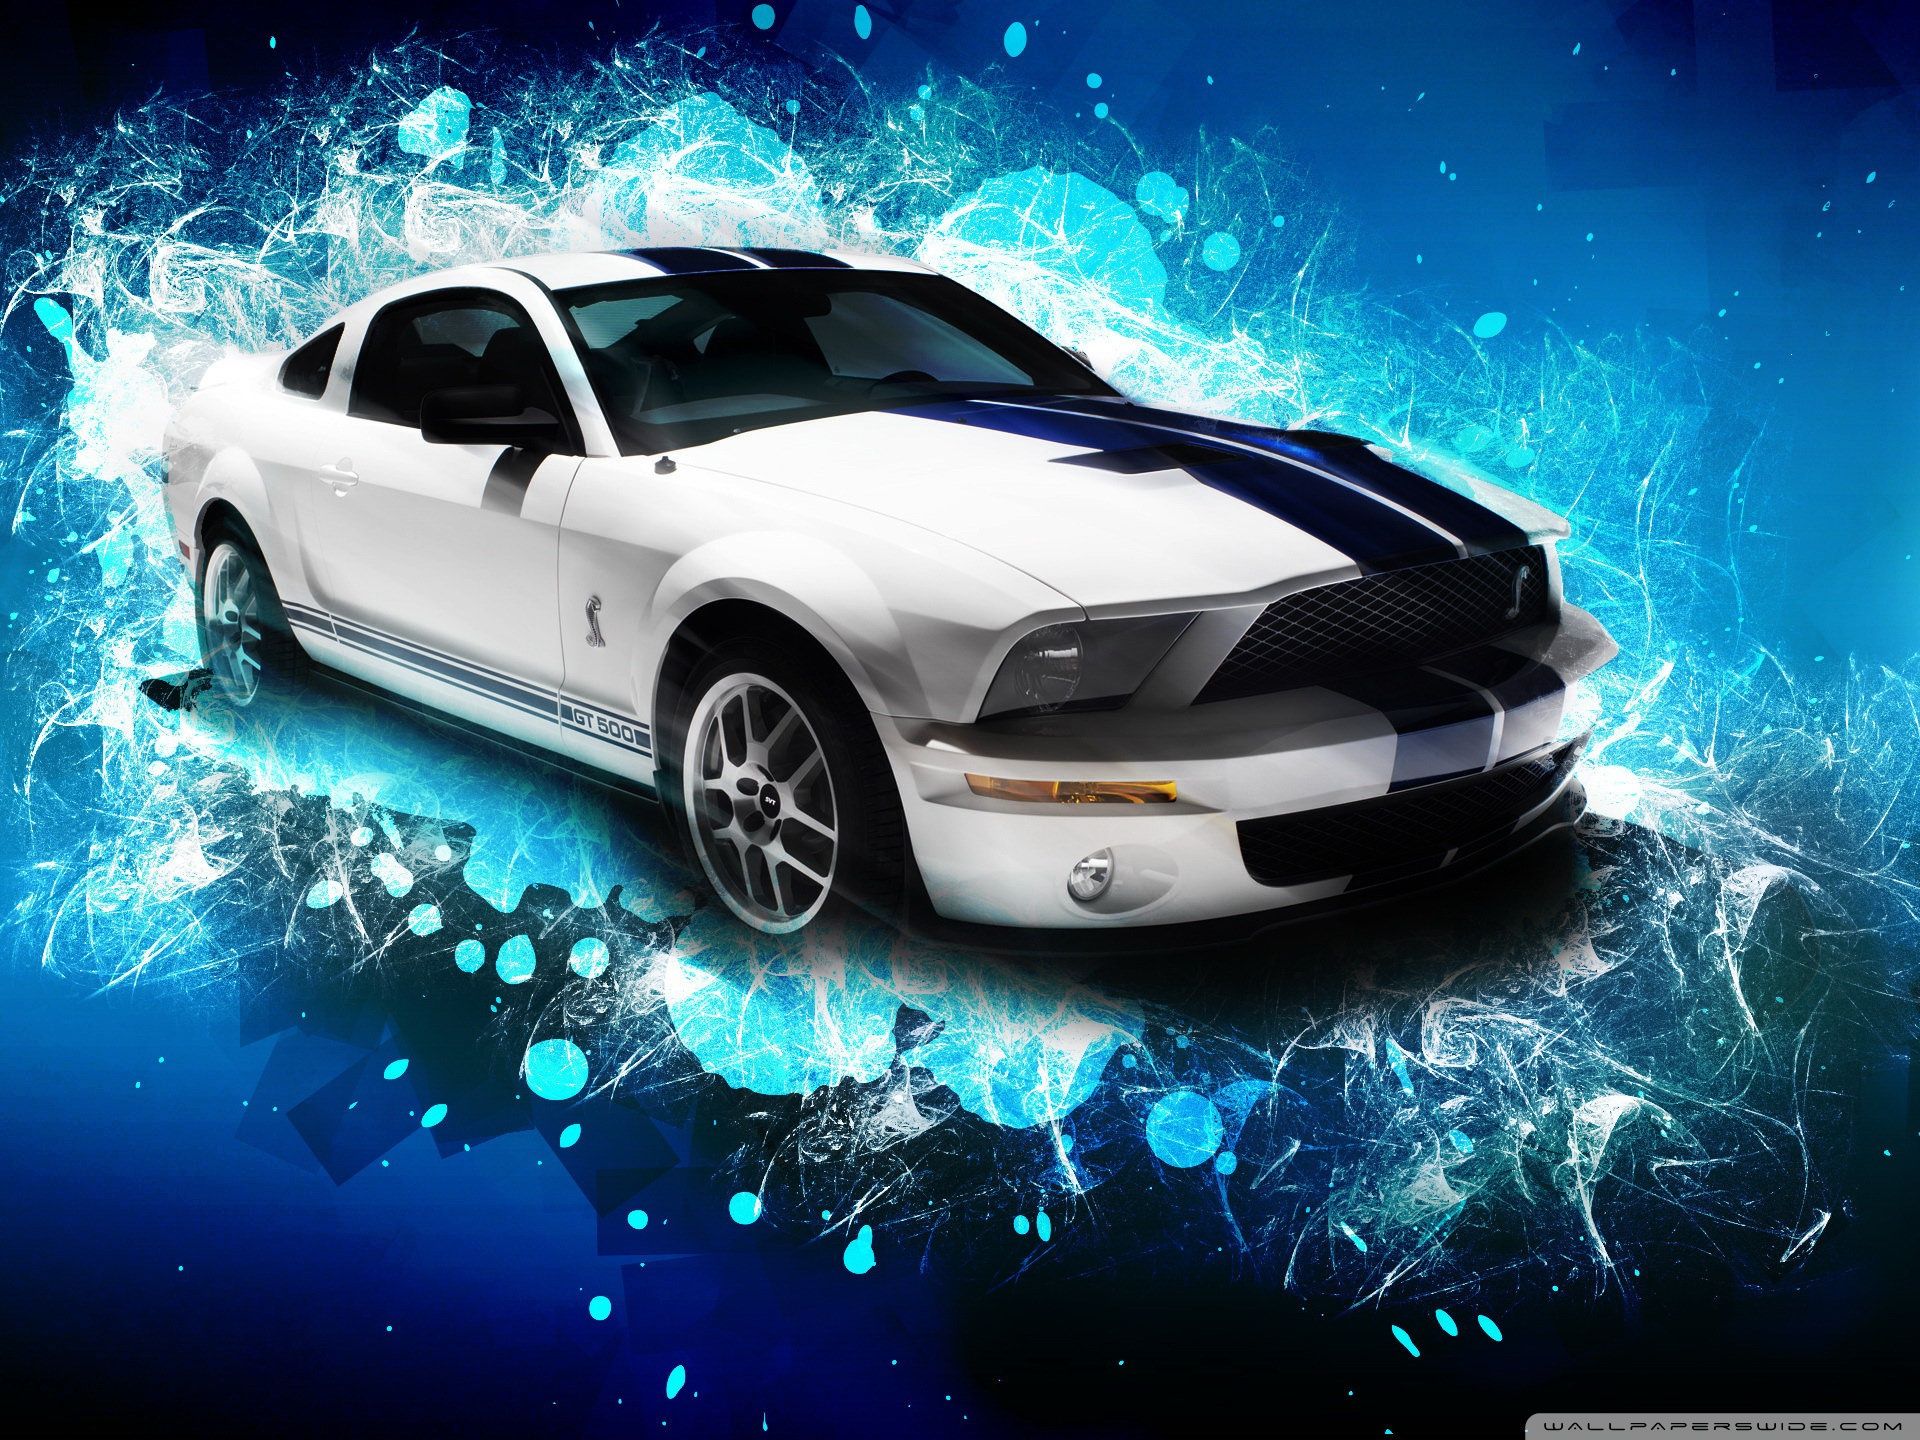 Creative Ford Mustang GT Ultra HD Desktop Background Wallpaper for 4K UHD TV, Widescreen & UltraWide Desktop & Laptop, Multi Display, Dual Monitor, Tablet